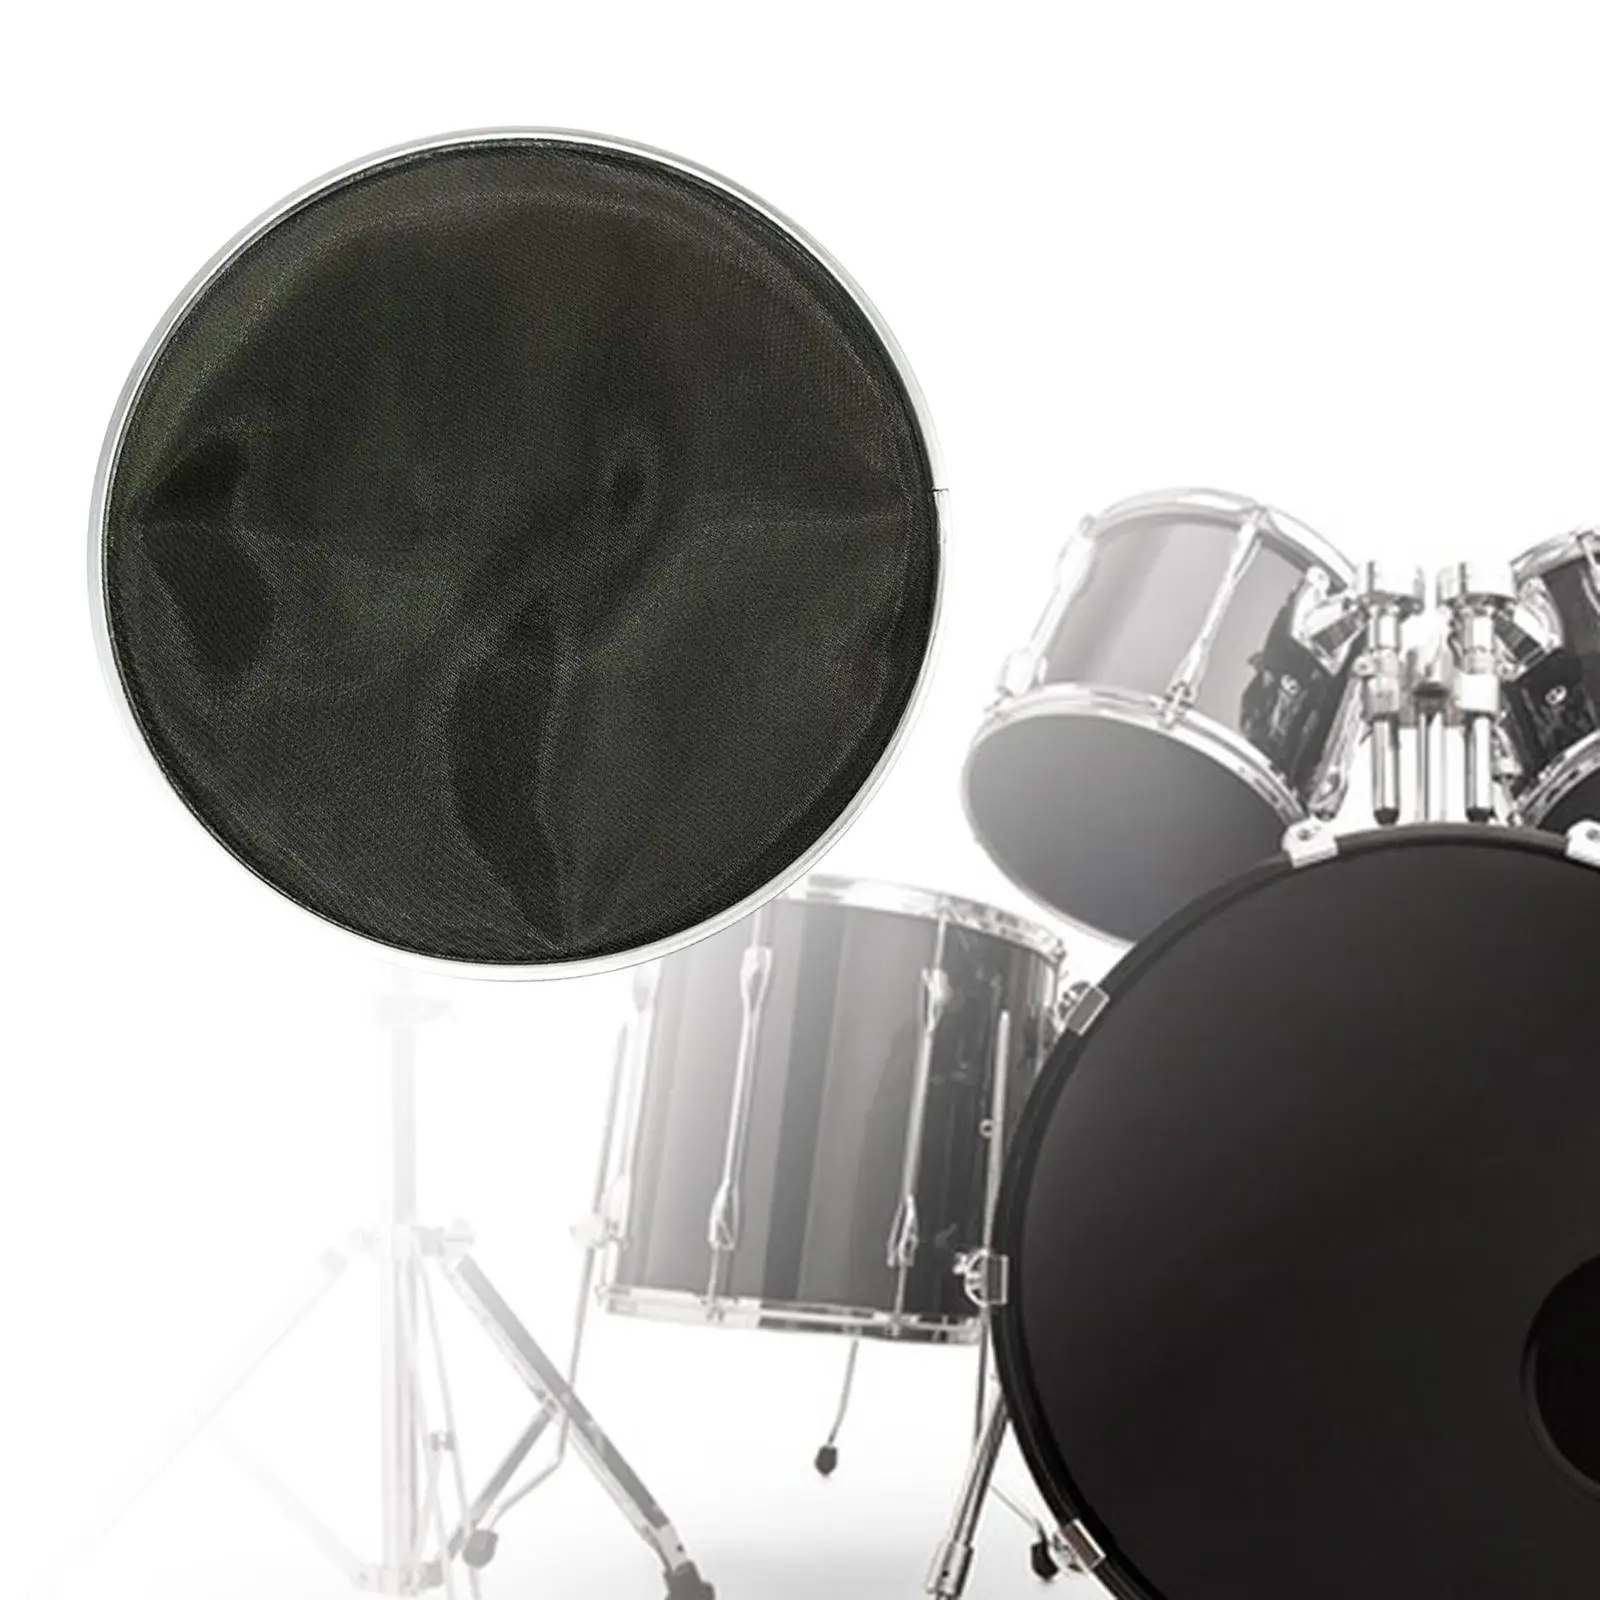 Bass Drum Head Professional Percussion Accessories Quiet Practice for Bass Drum